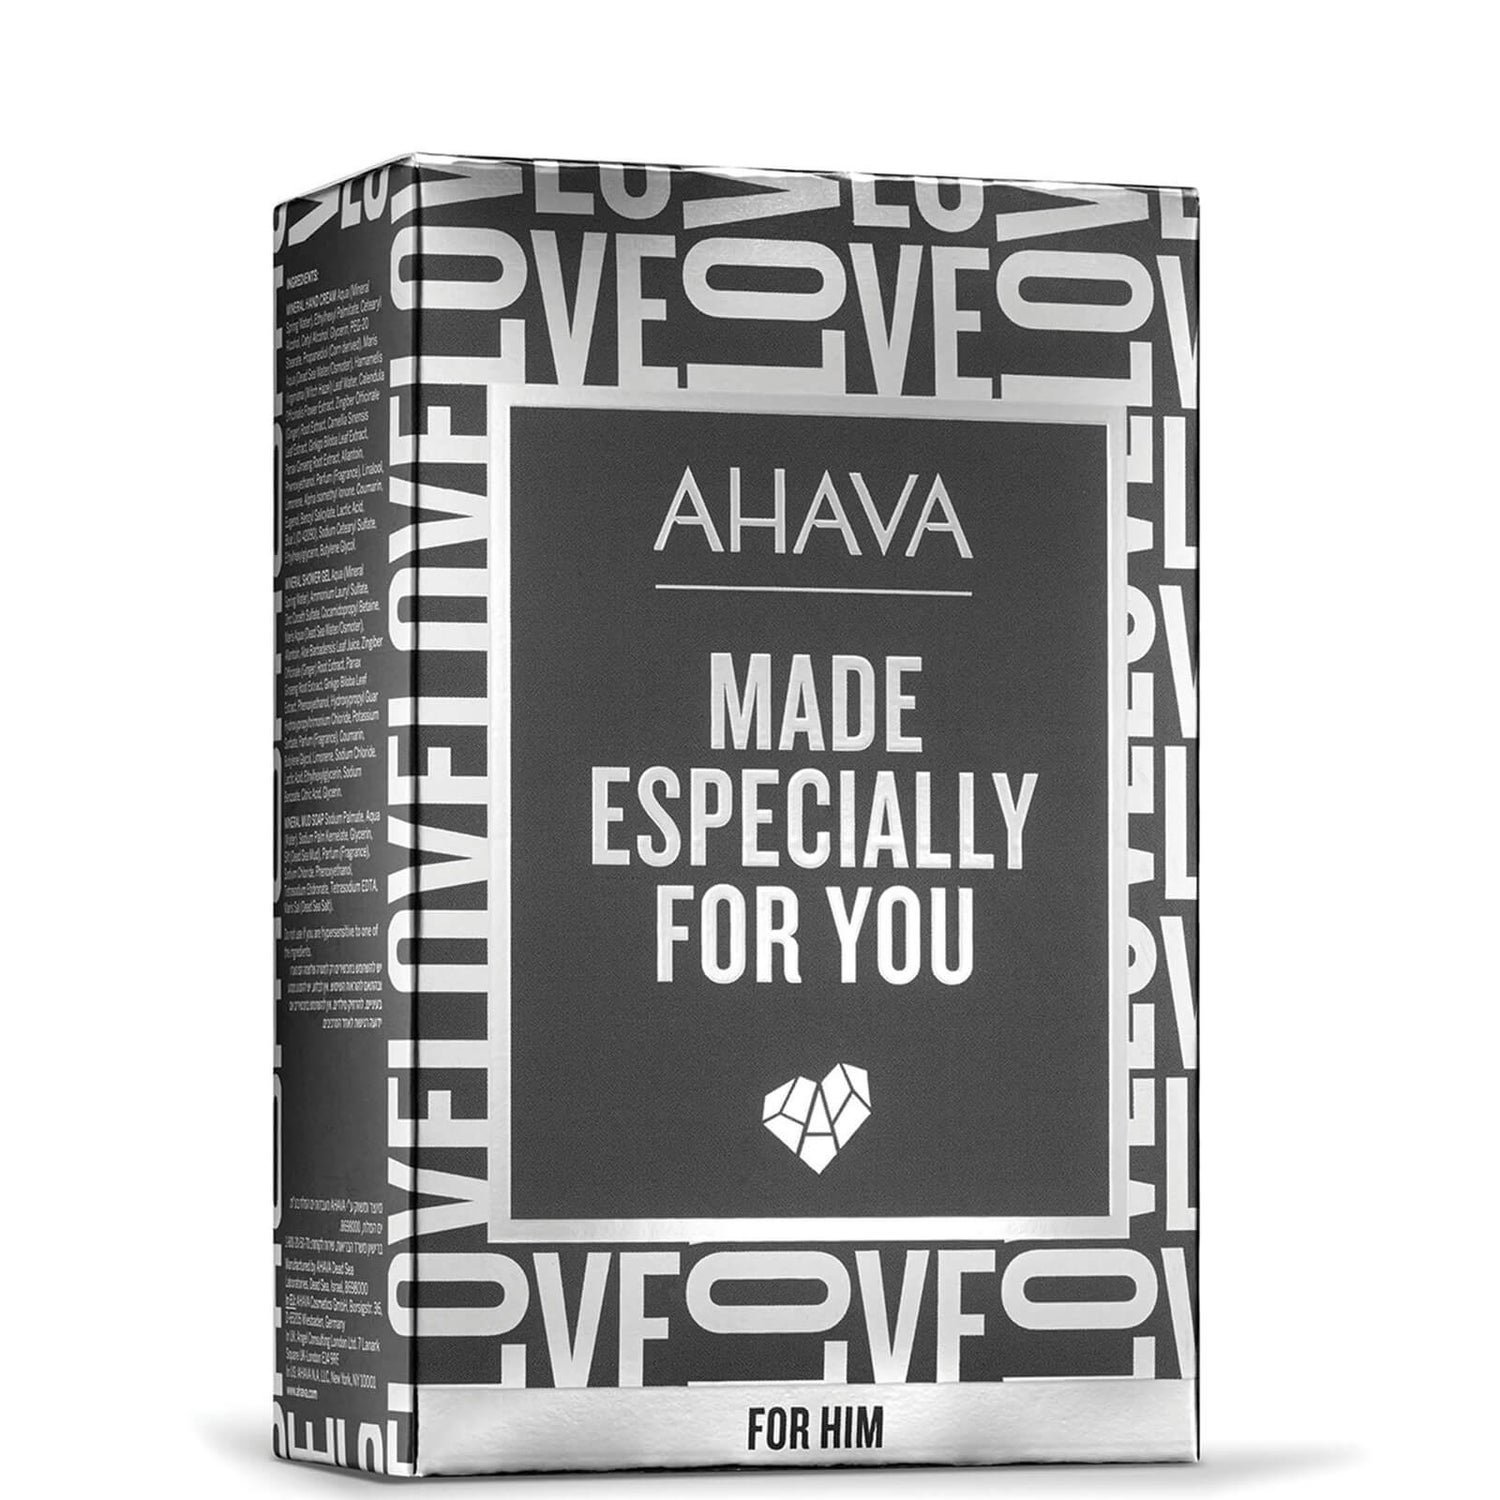 AHAVA Made Especially For You Kit